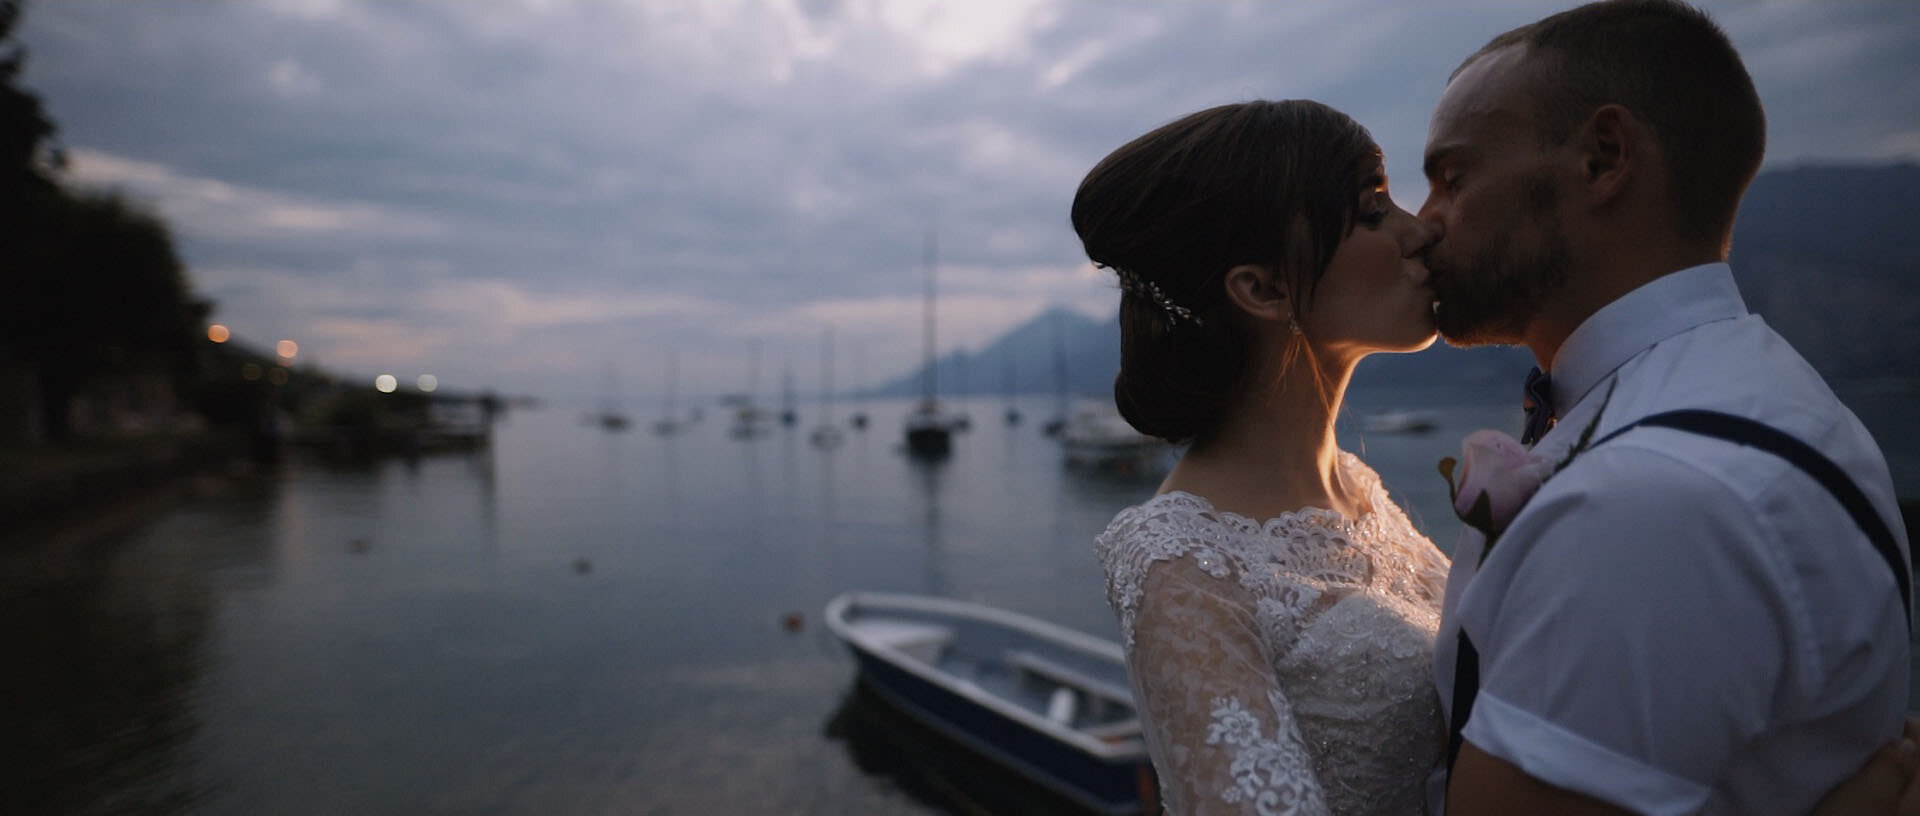 Lisa & Josh's Perfect Malcesine Wedding at Lake Garda 42.jpg